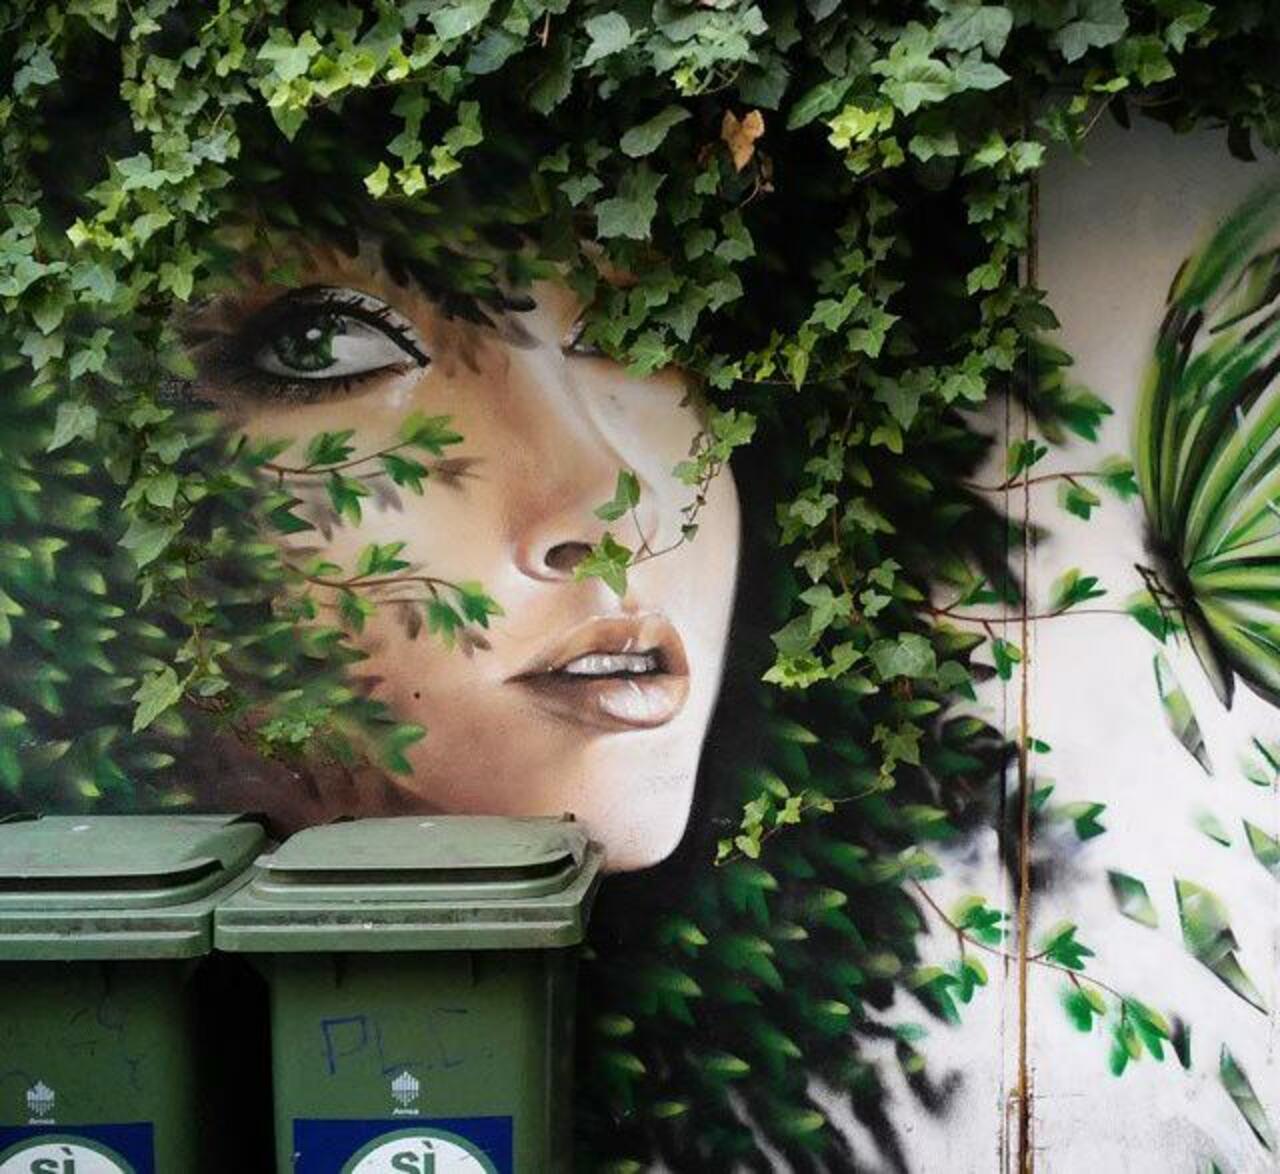 When Street Art meets nature by Dasxa in Isola, Millan 

#art #arte #graffiti #streetart http://t.co/99sHVAPHlw